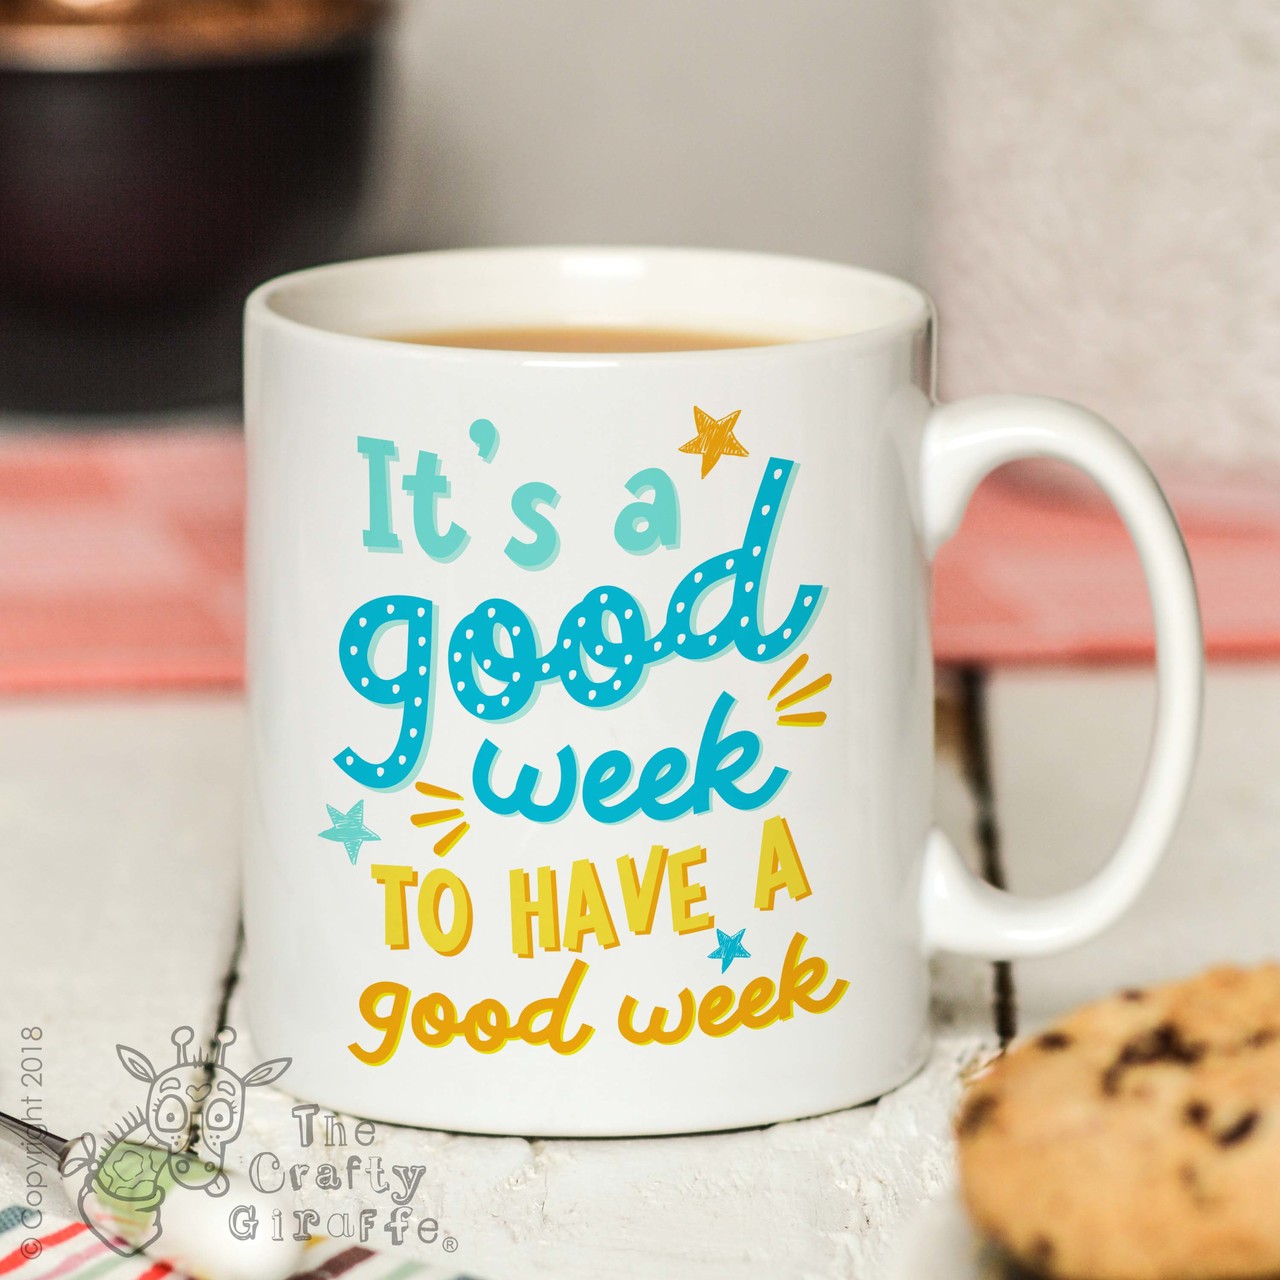 It’s a good week to have a good week Mug